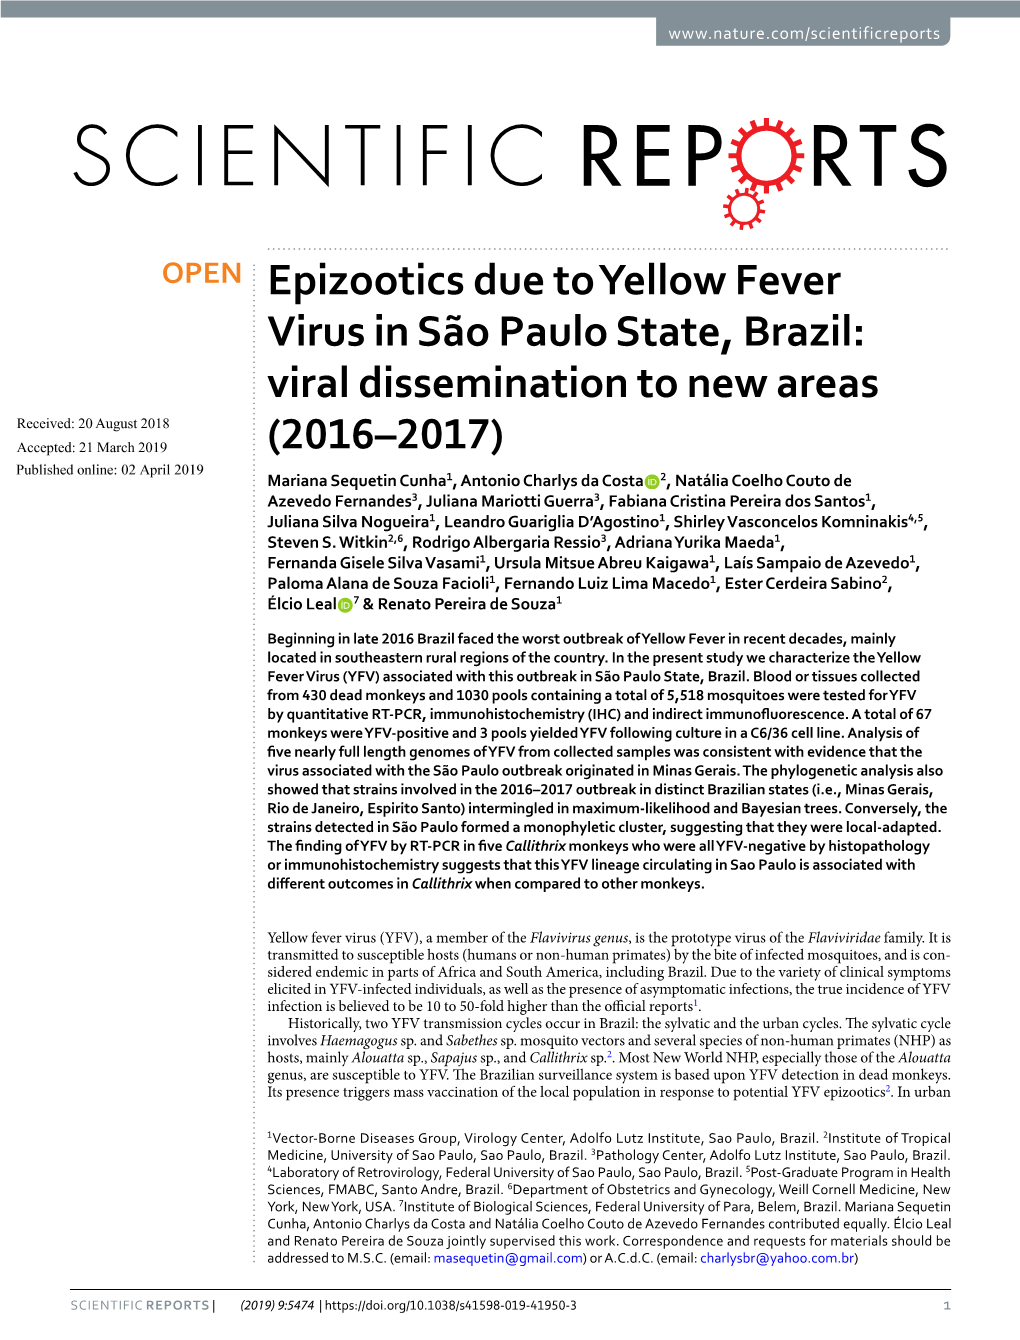 Epizootics Due to Yellow Fever Virus in São Paulo State, Brazil